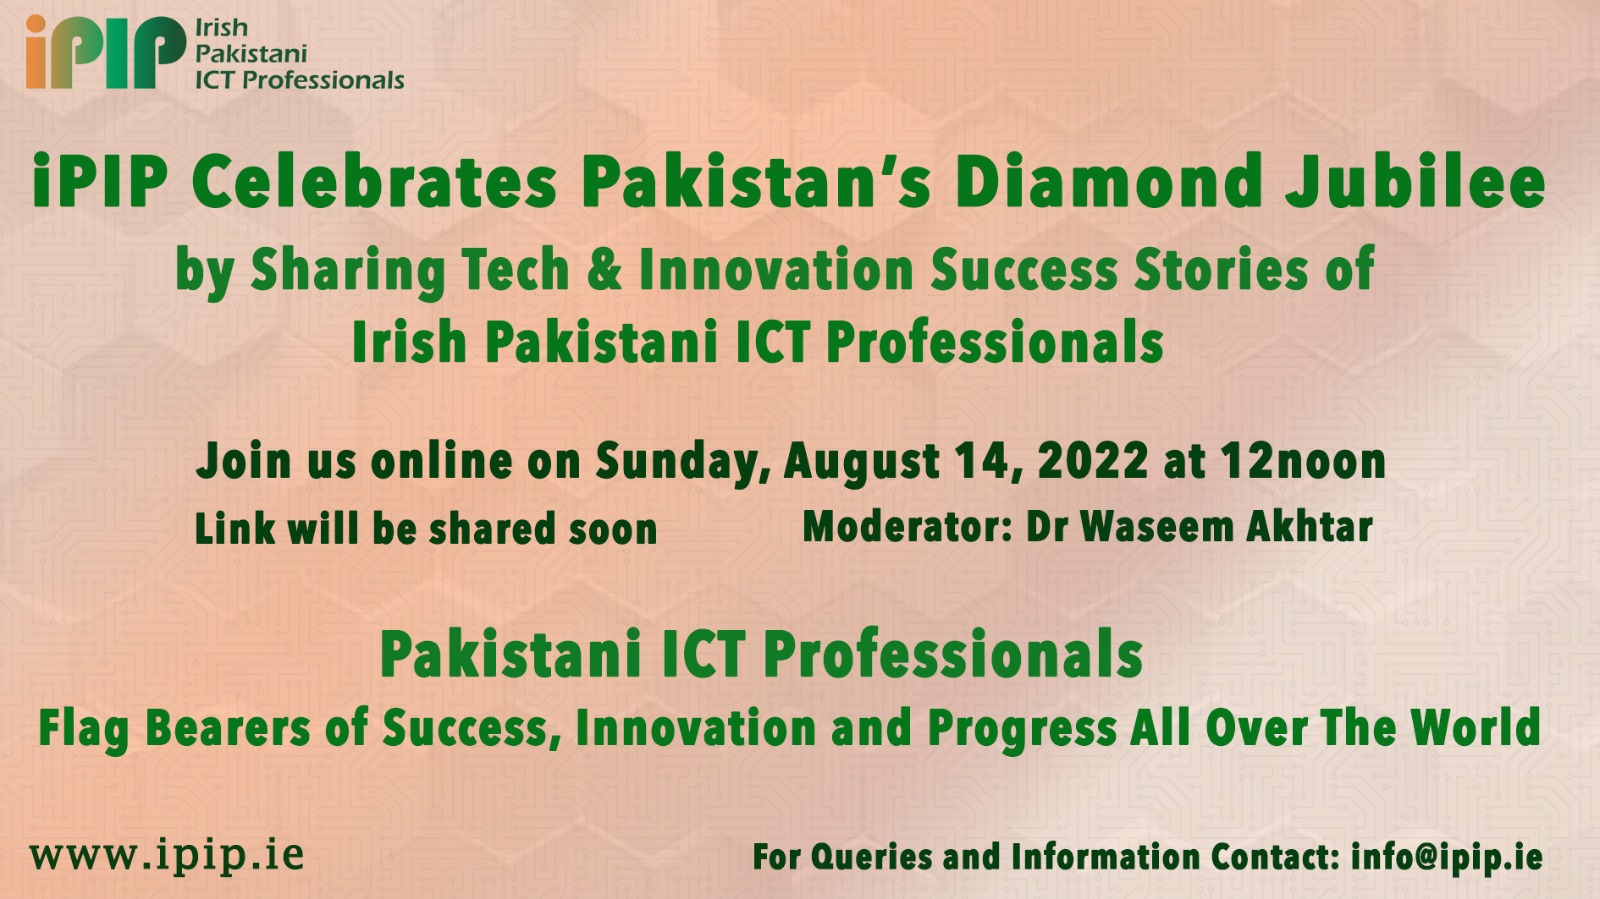 iPIP Celebrates Pakistan's Diamond Jubilee - Virtual Event